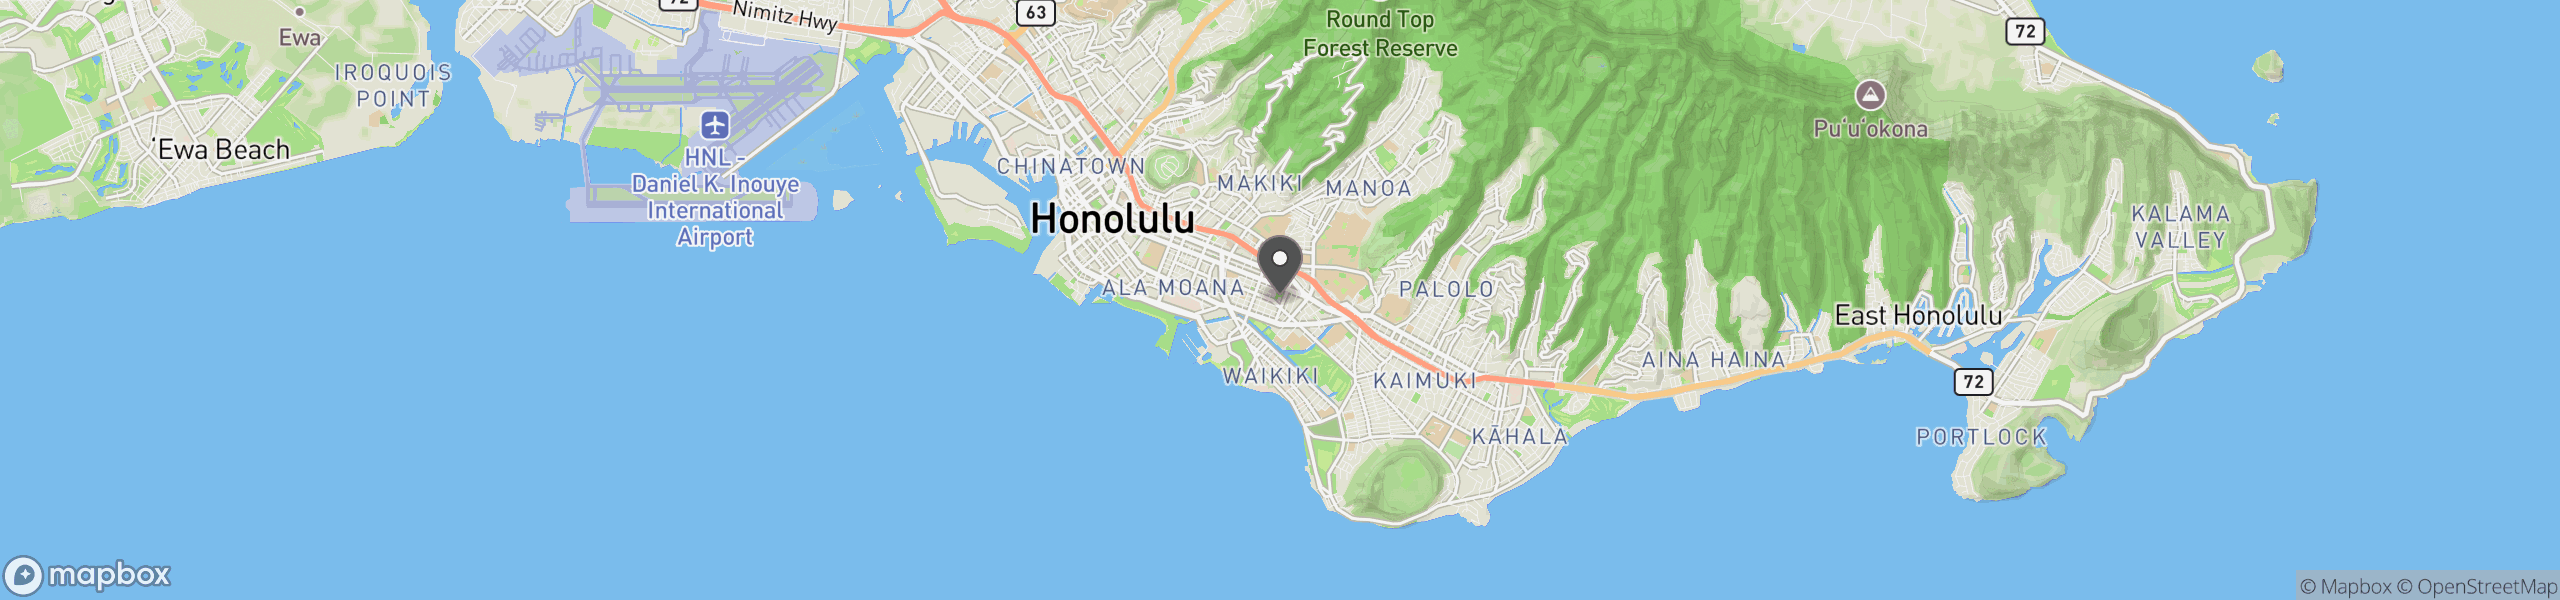 Honolulu, HI 96826